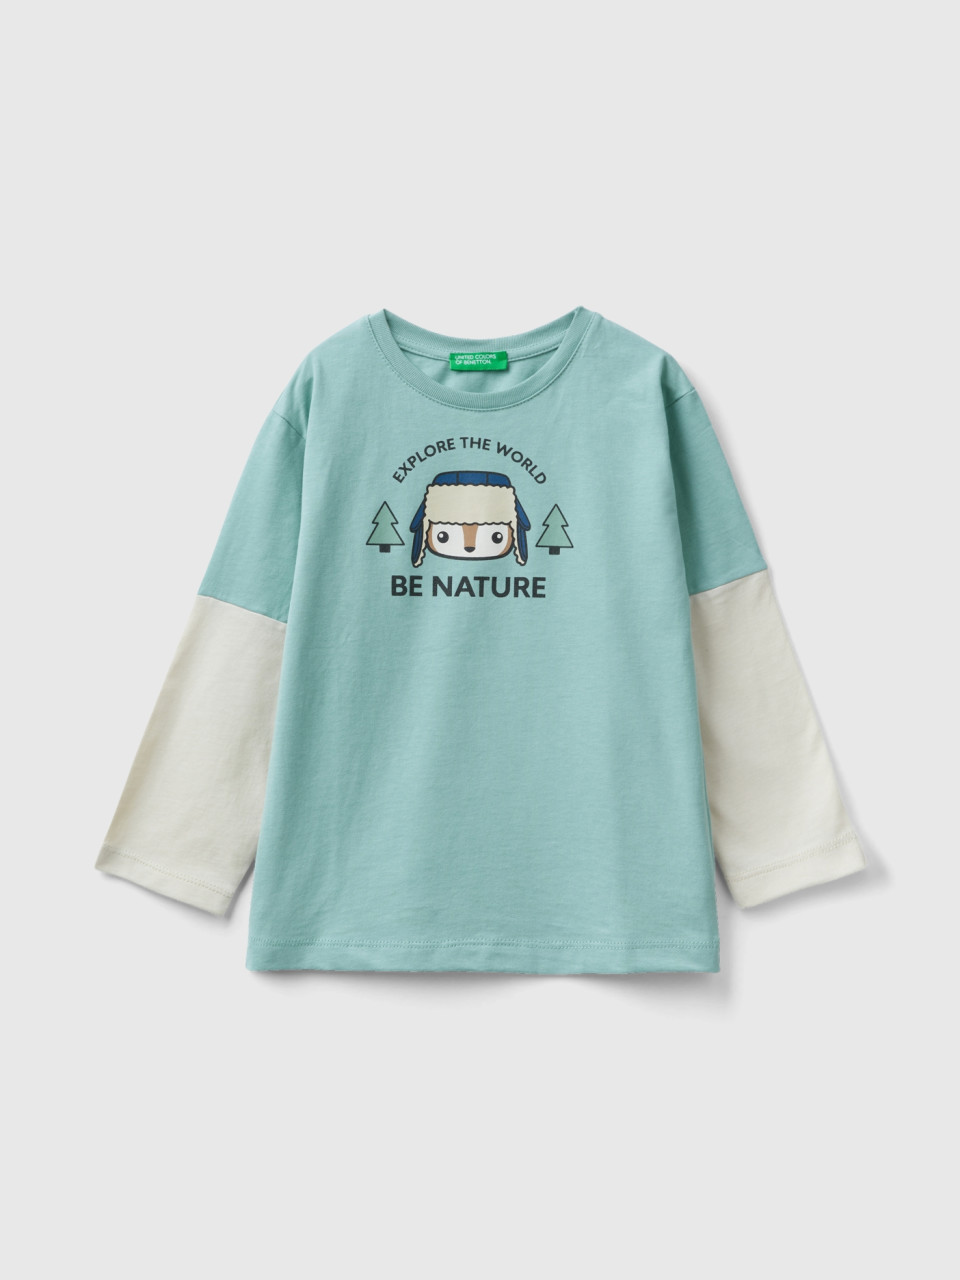 Benetton, Warm T-shirt With Print, Aqua, Kids